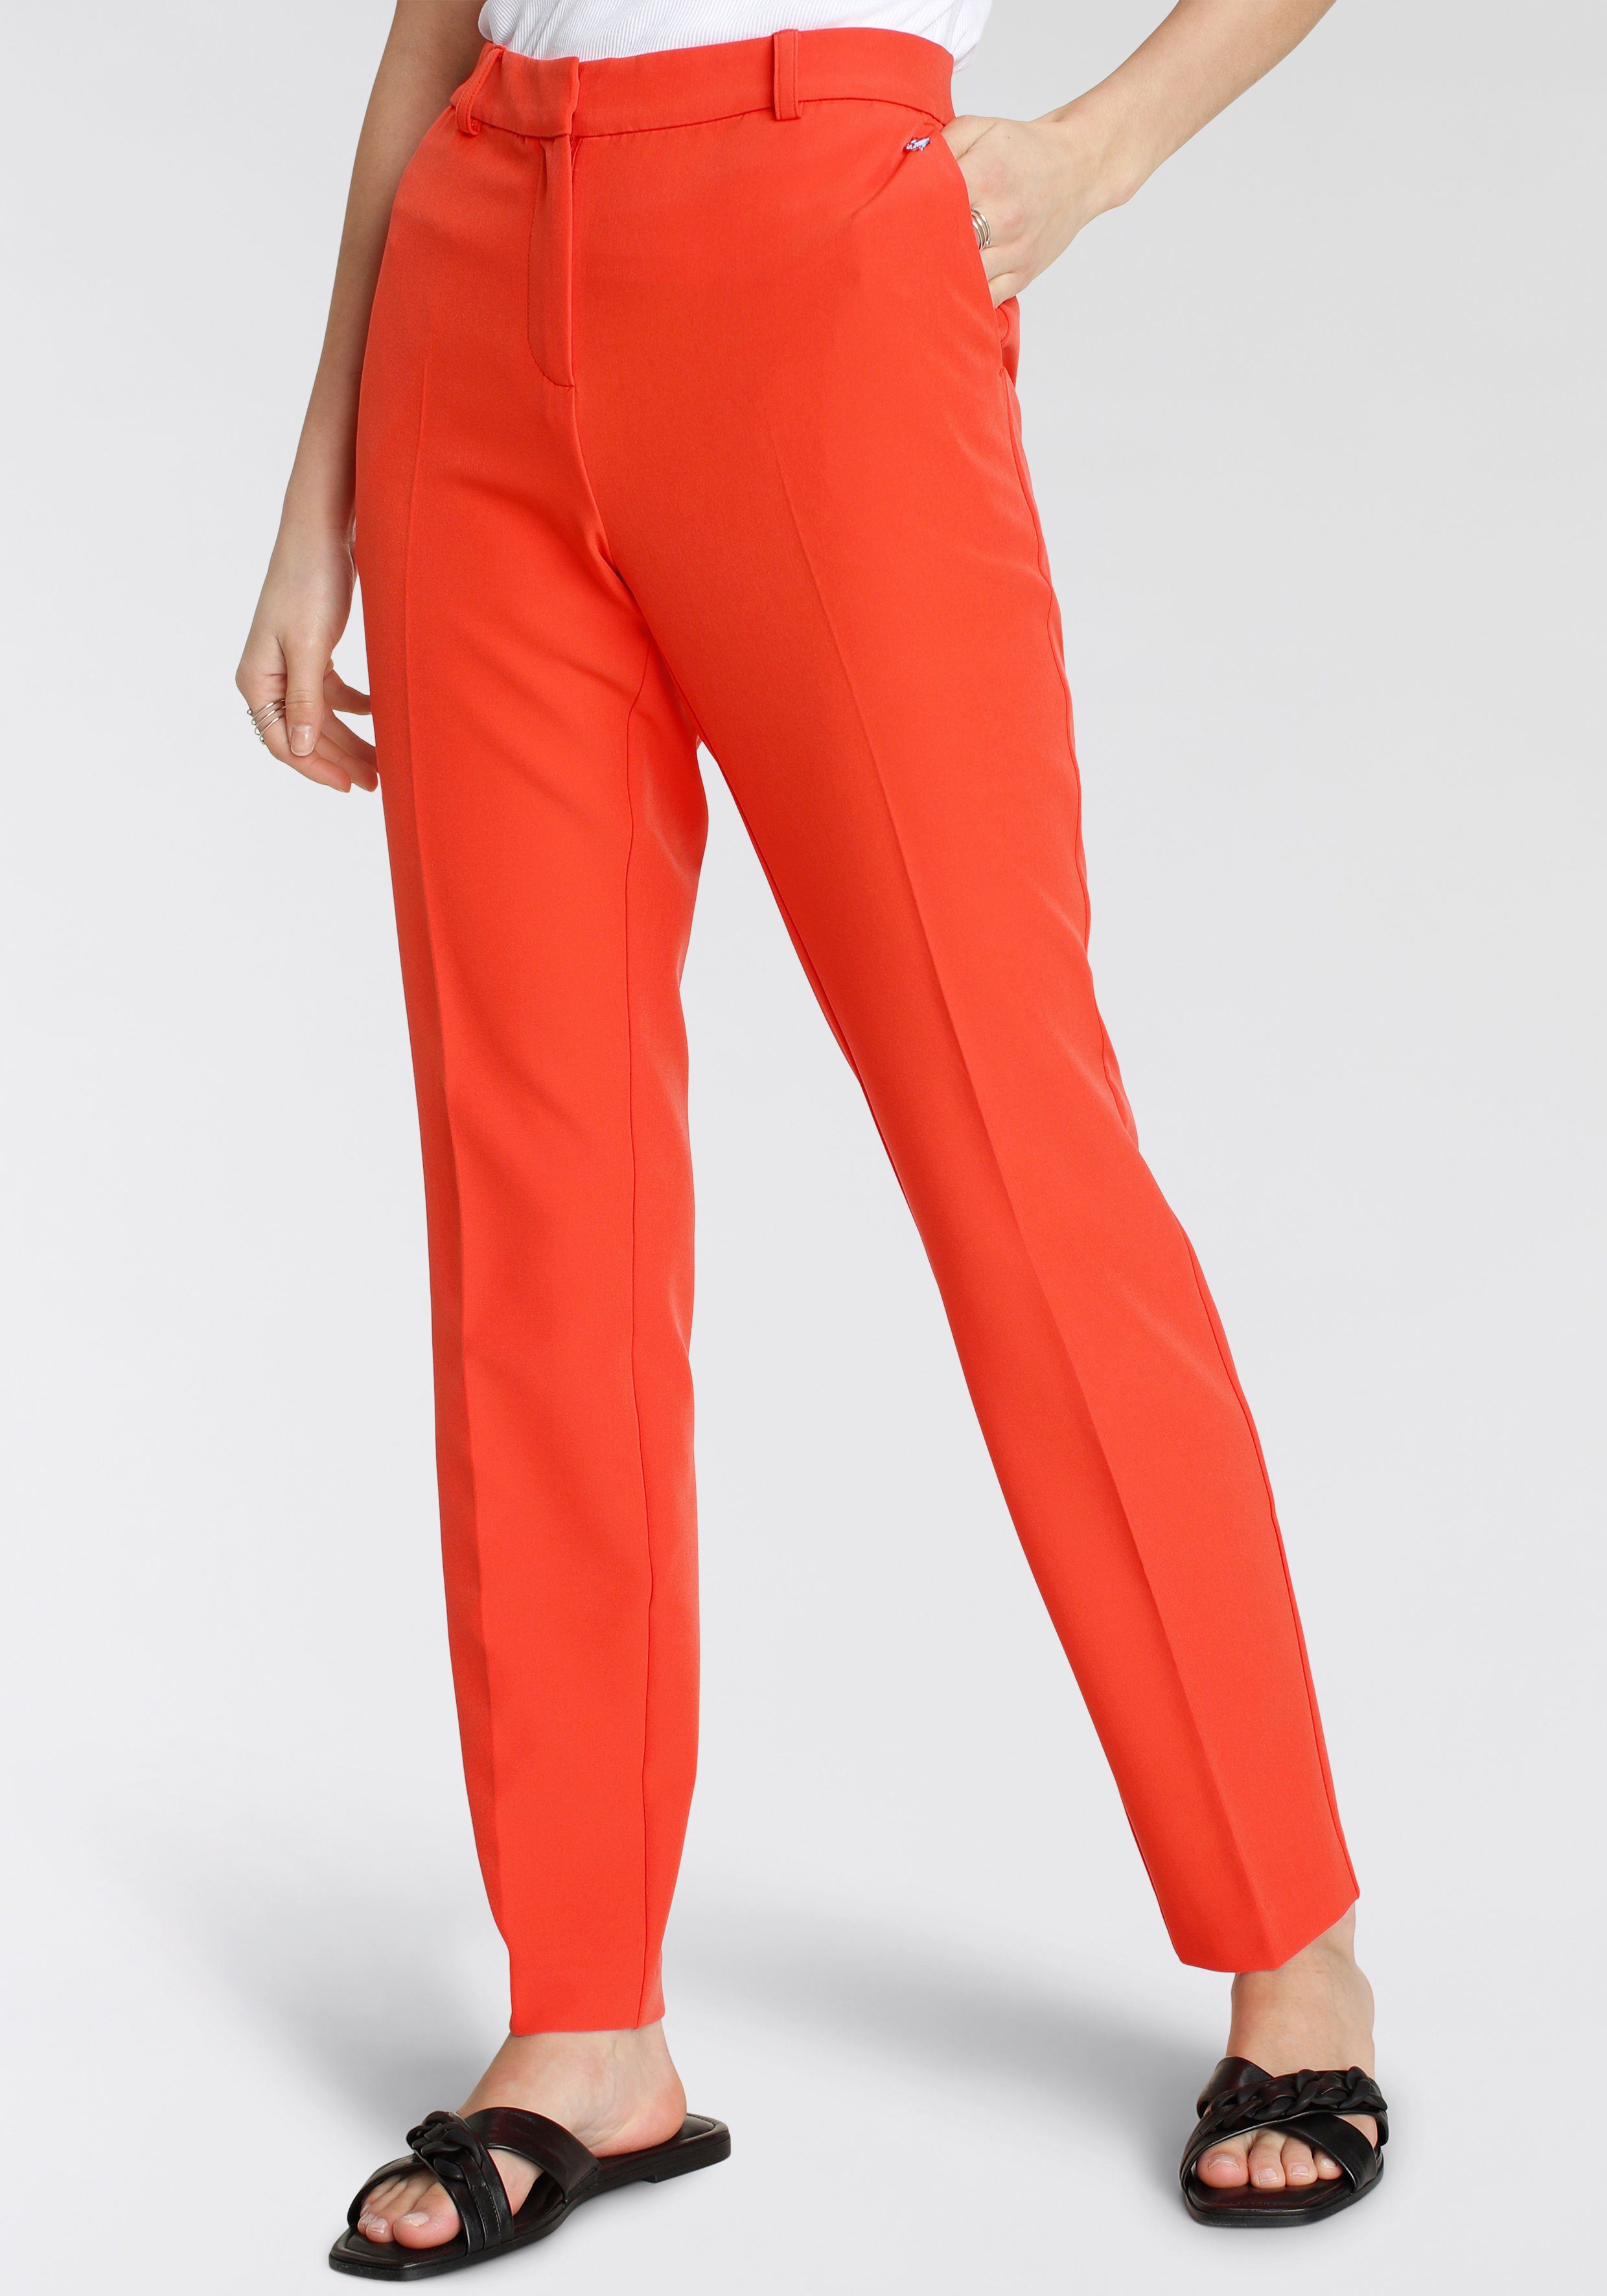 Tamaris Anzughose in aus nachhaltigem Material) orange (Hose Trendfarben